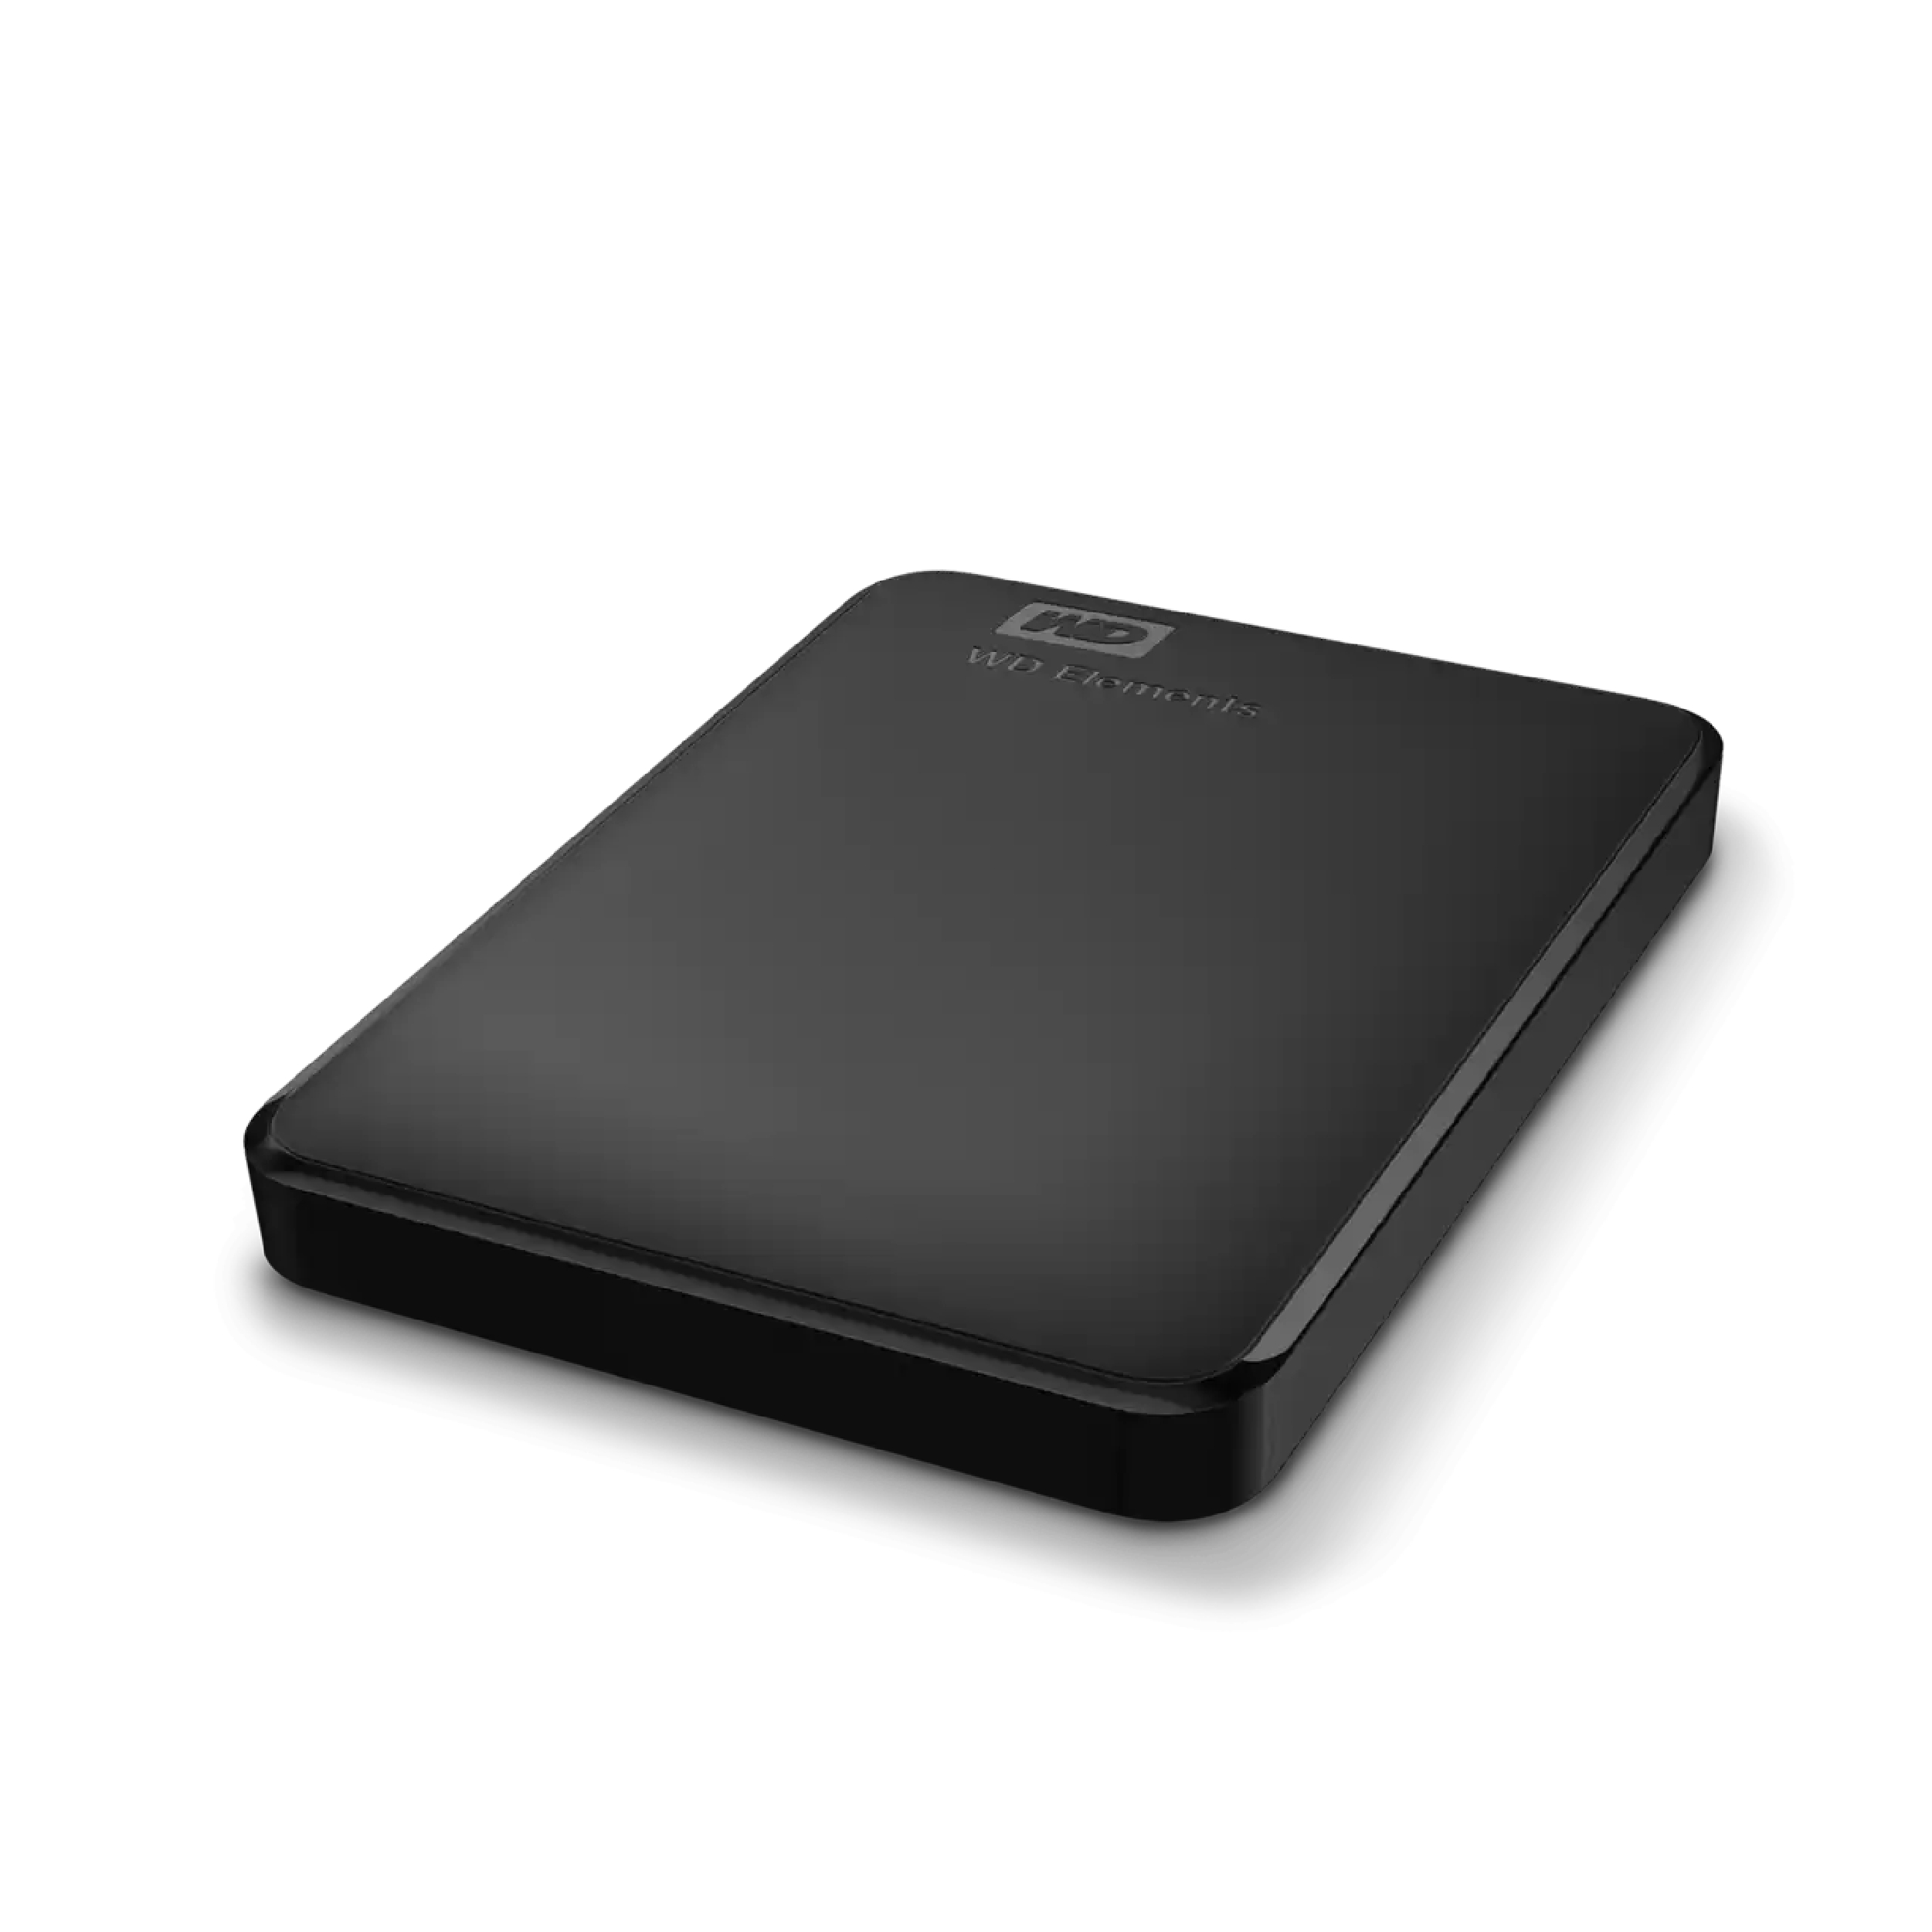 WD Elements Portable, 1TB, USB 3.0, External Hard Drive, Black (WDBUZG0010BBK-WESN)